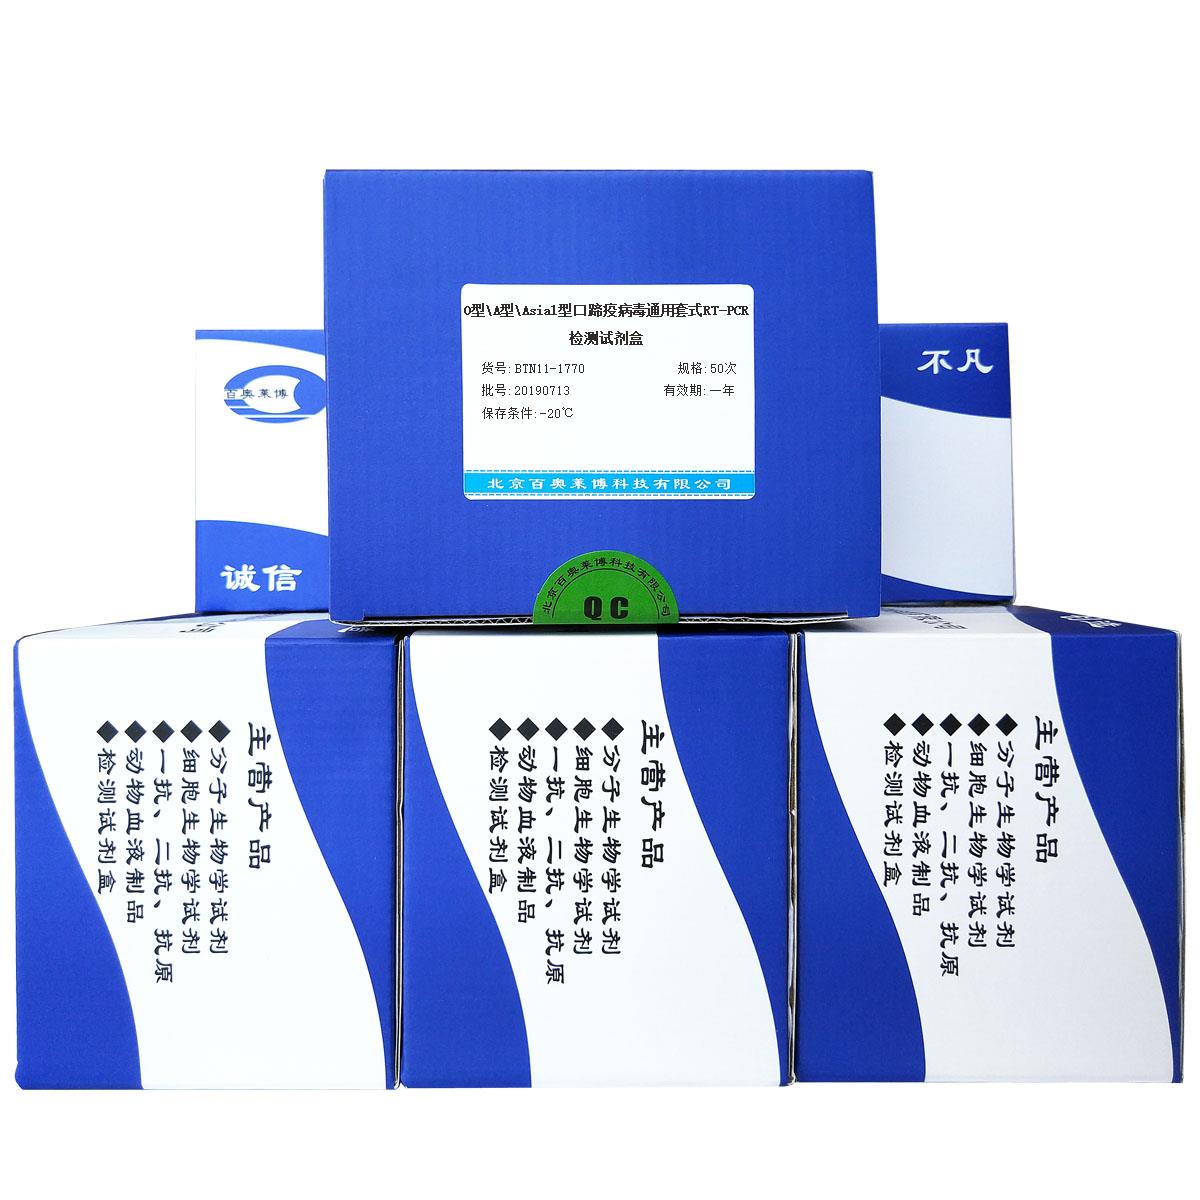 O型\A型\Asia1型口蹄疫病毒通用套式RT-PCR检测试剂盒